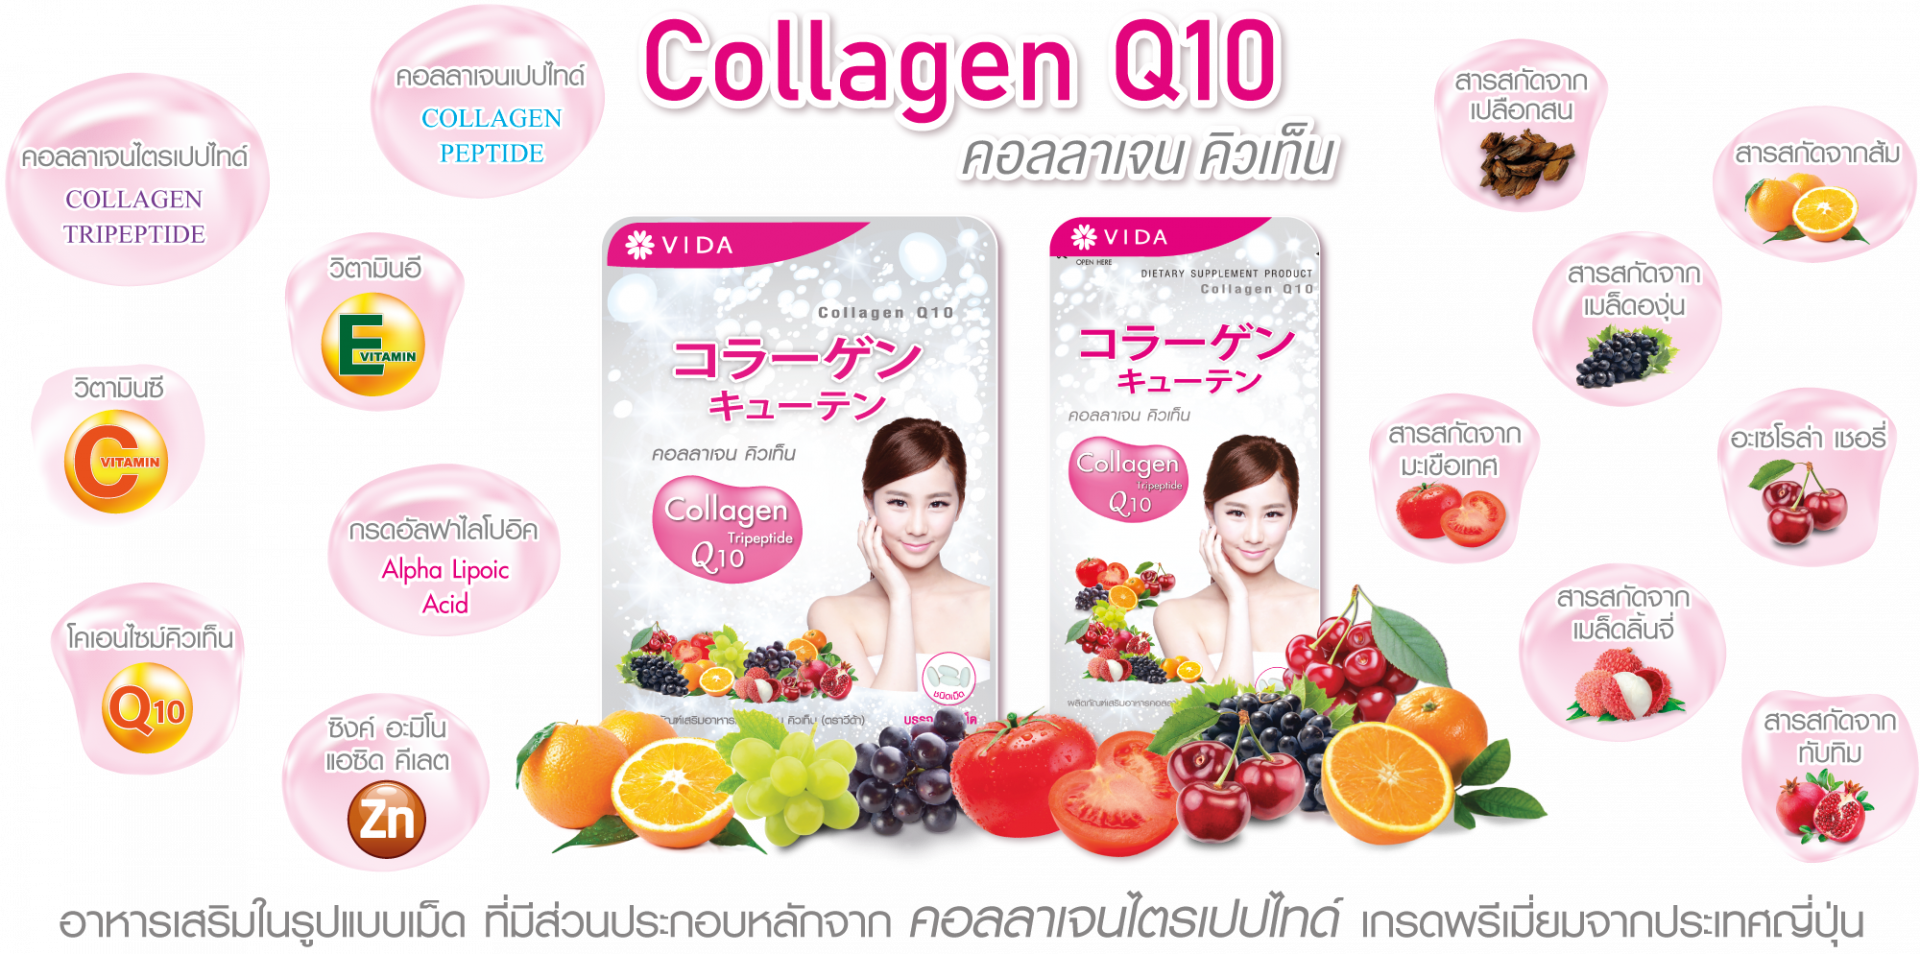 vida collagen Q10 วีด้า คอลลาเจน คิวเท็น